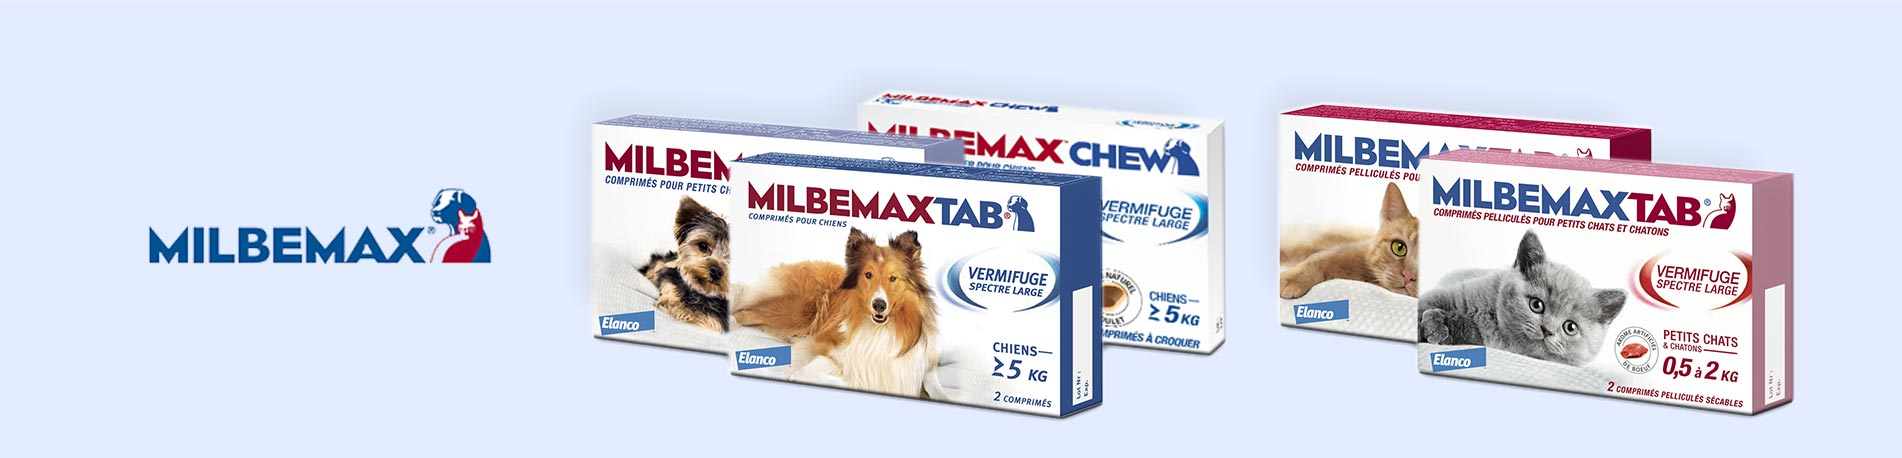 milbemax - Pharmacie en ligne